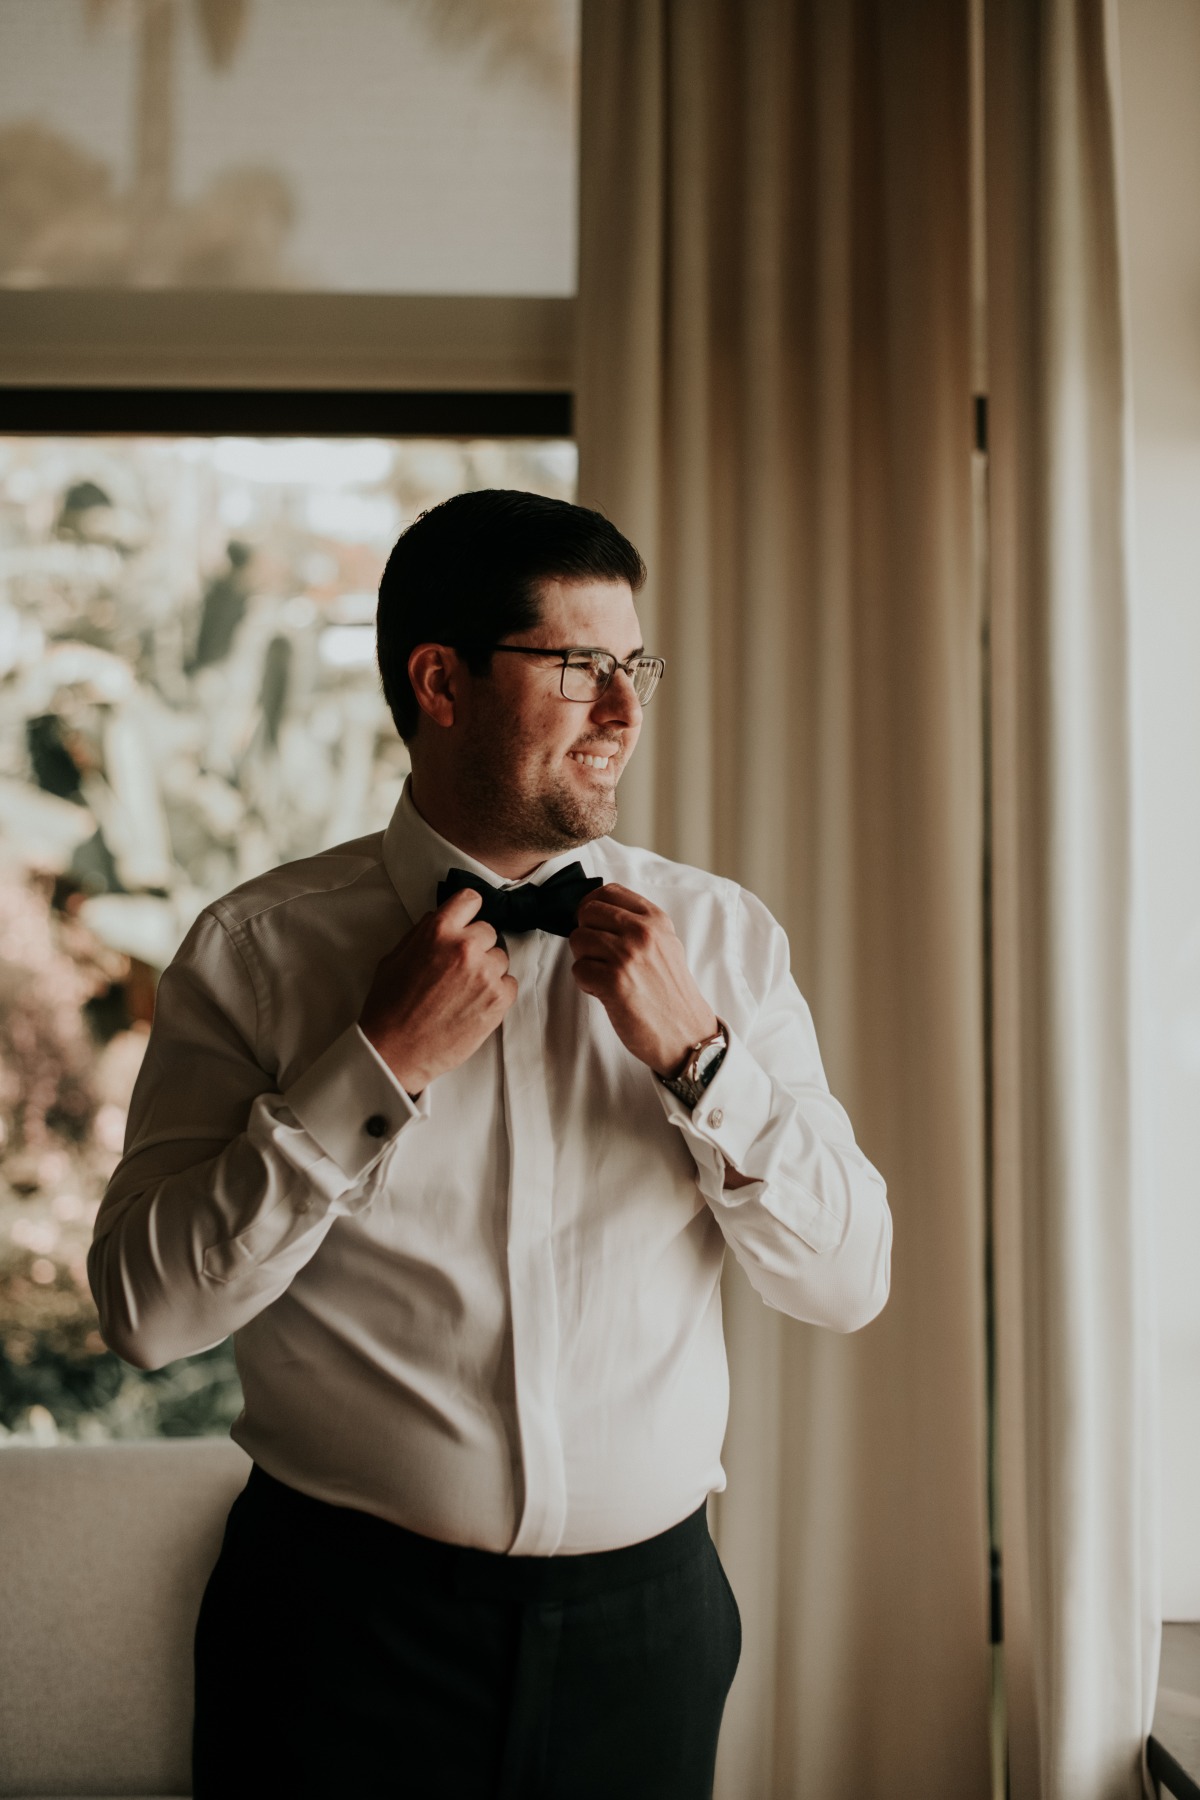 classic black tie look for groom